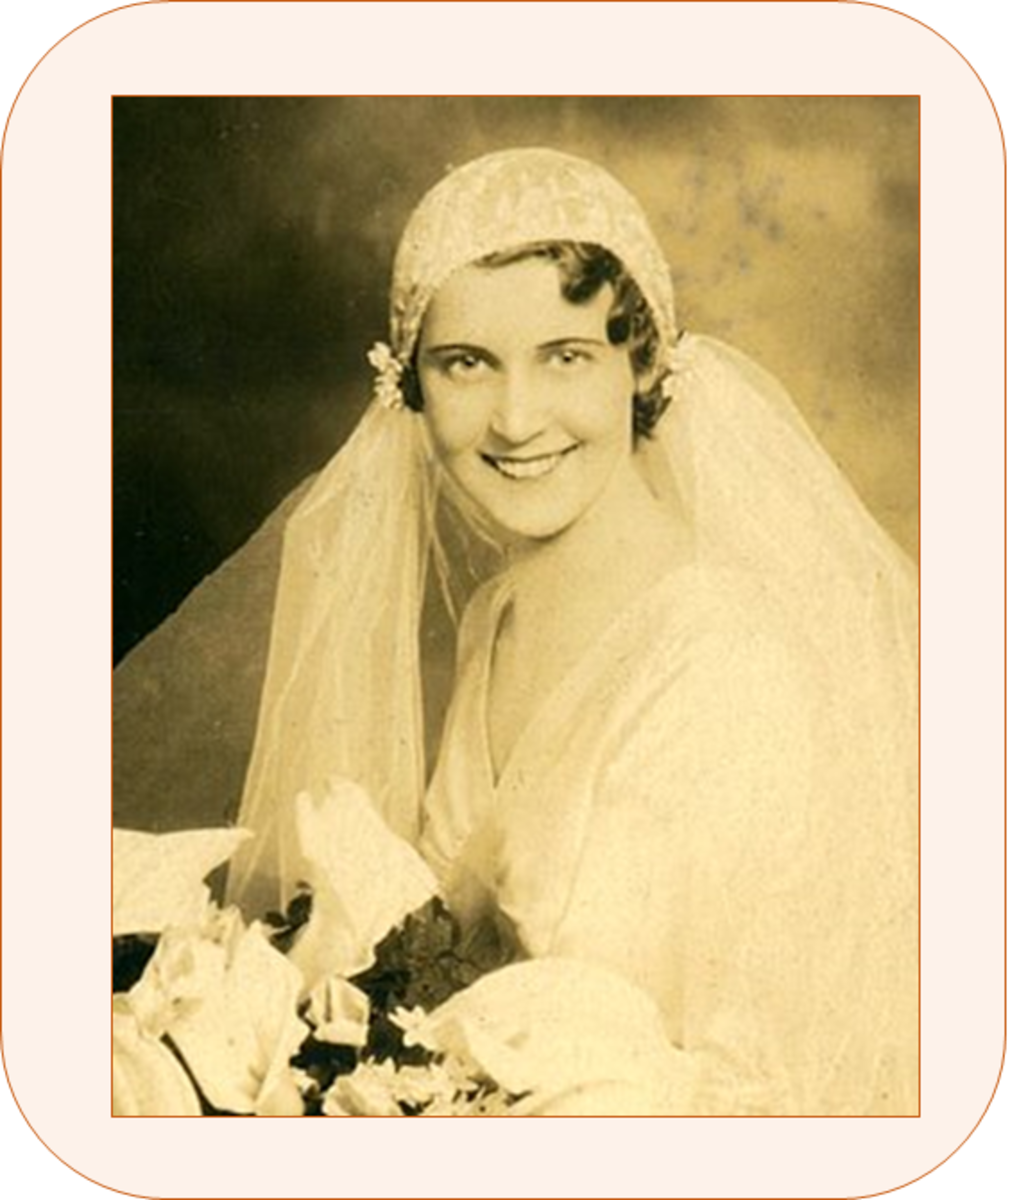 WonderlandByLilian Vintage Long Wedding Lace Veils with Floral Headpieces - Antique Bridal Veil